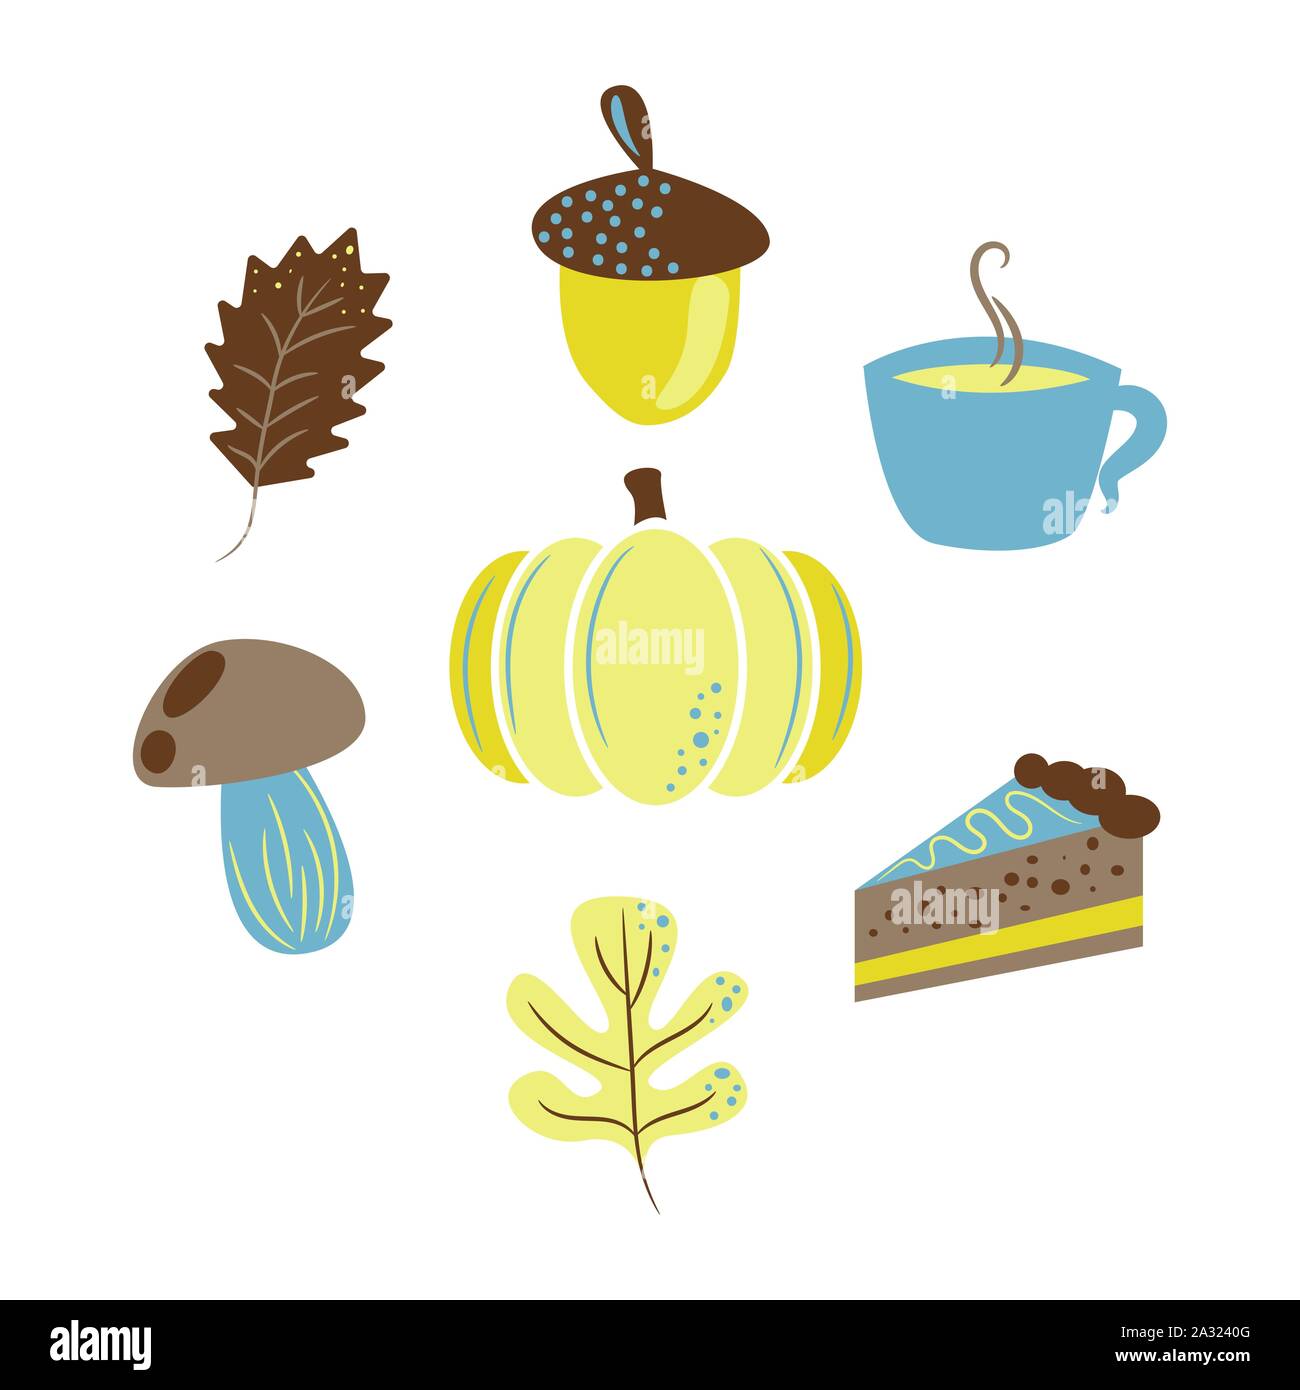 Autumn harvest objects pumpkin, acorn, pie, mushroom and leaves. Fall clip art. Stock Vector